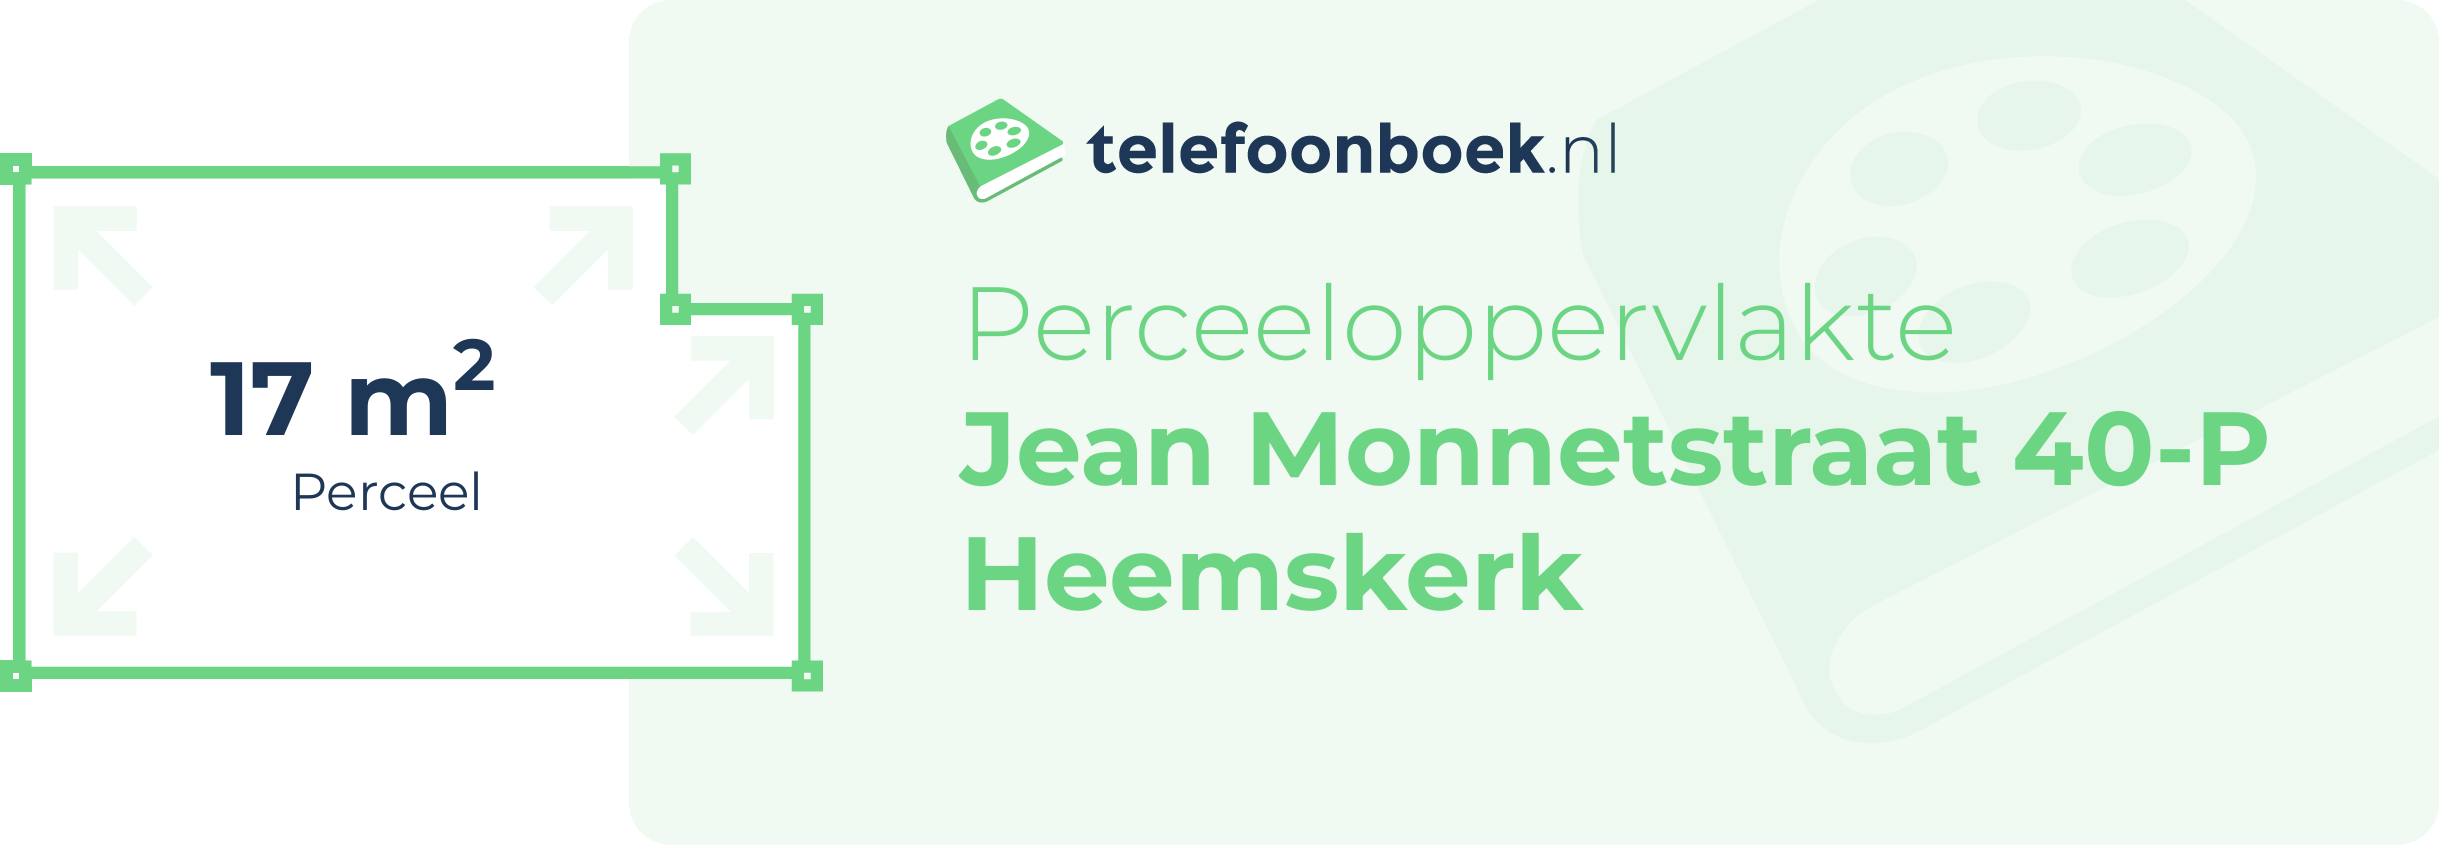 Perceeloppervlakte Jean Monnetstraat 40-P Heemskerk